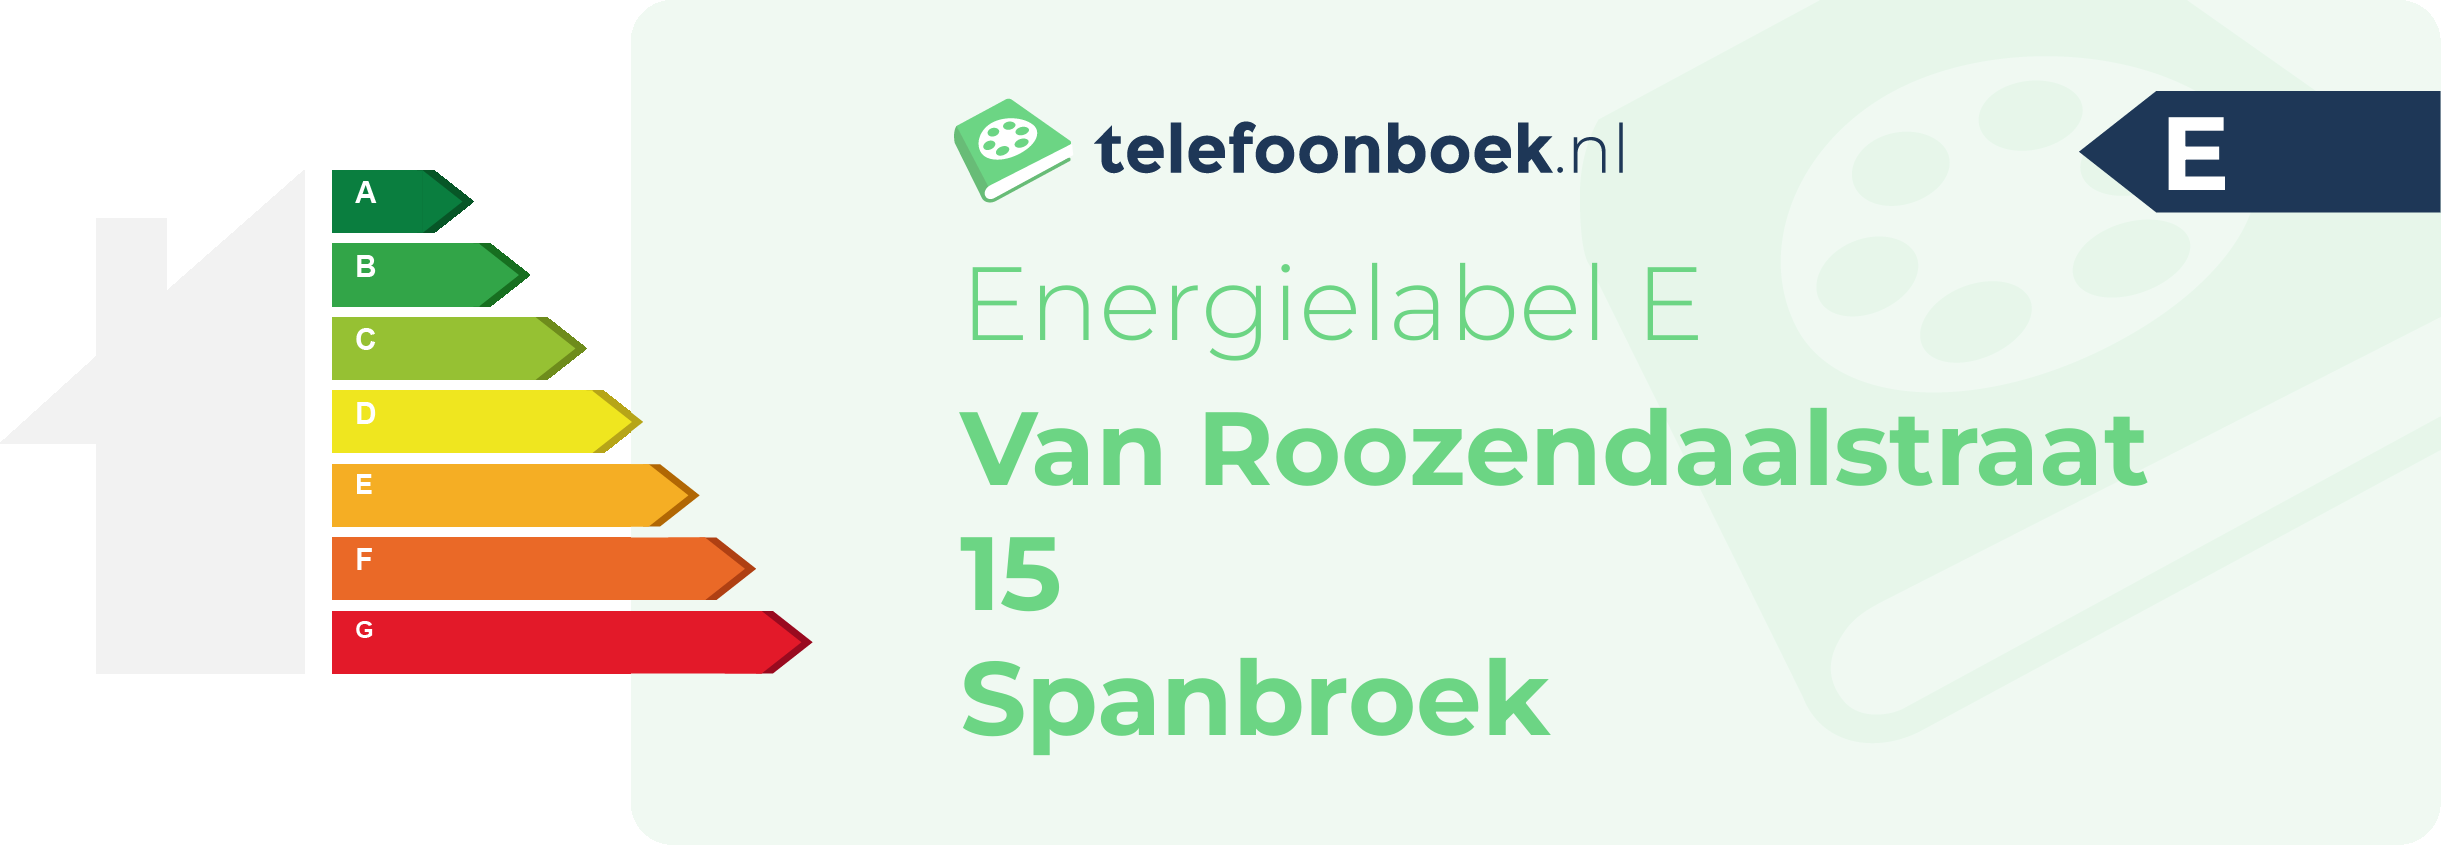 Energielabel Van Roozendaalstraat 15 Spanbroek